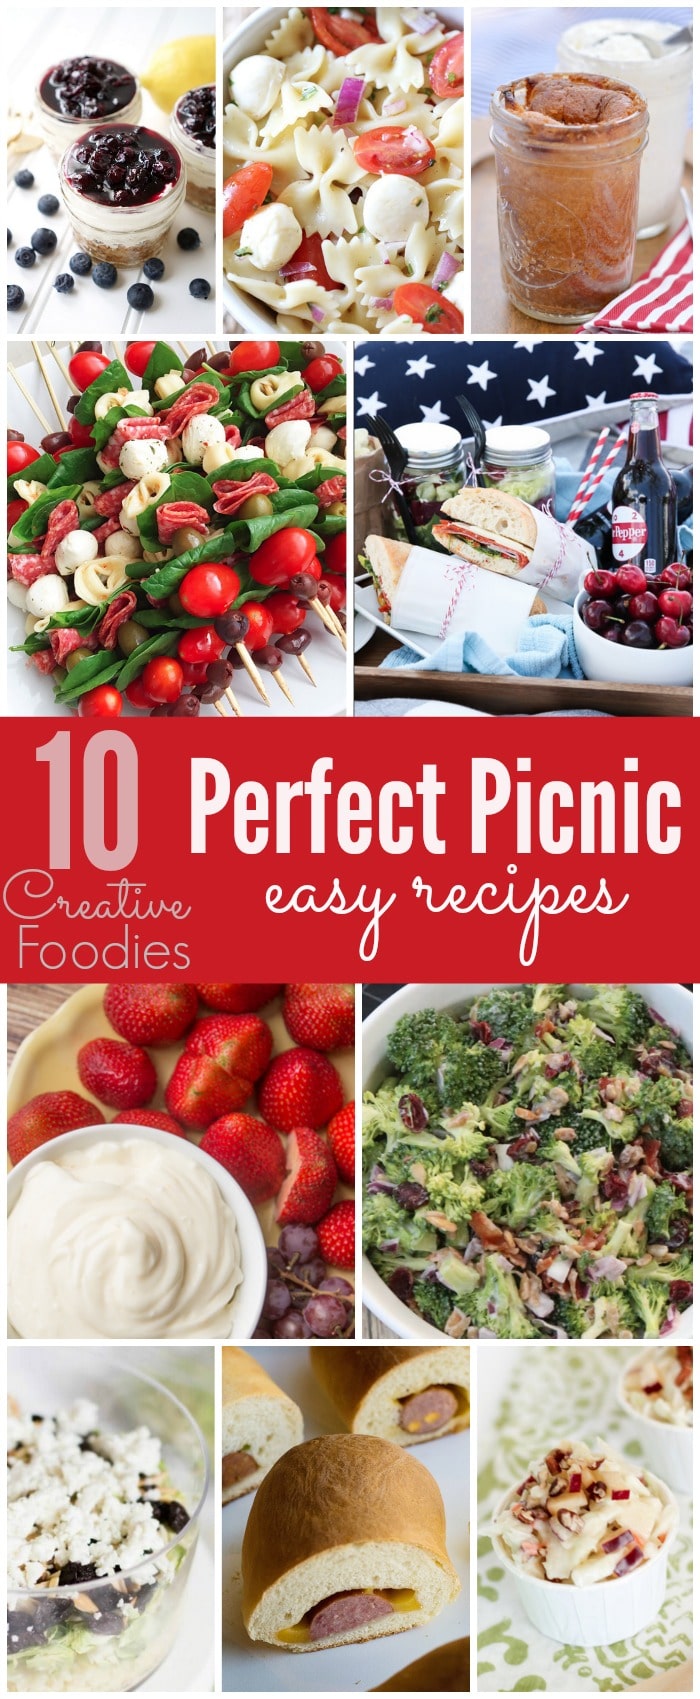 10 Easy Picnic Recipes